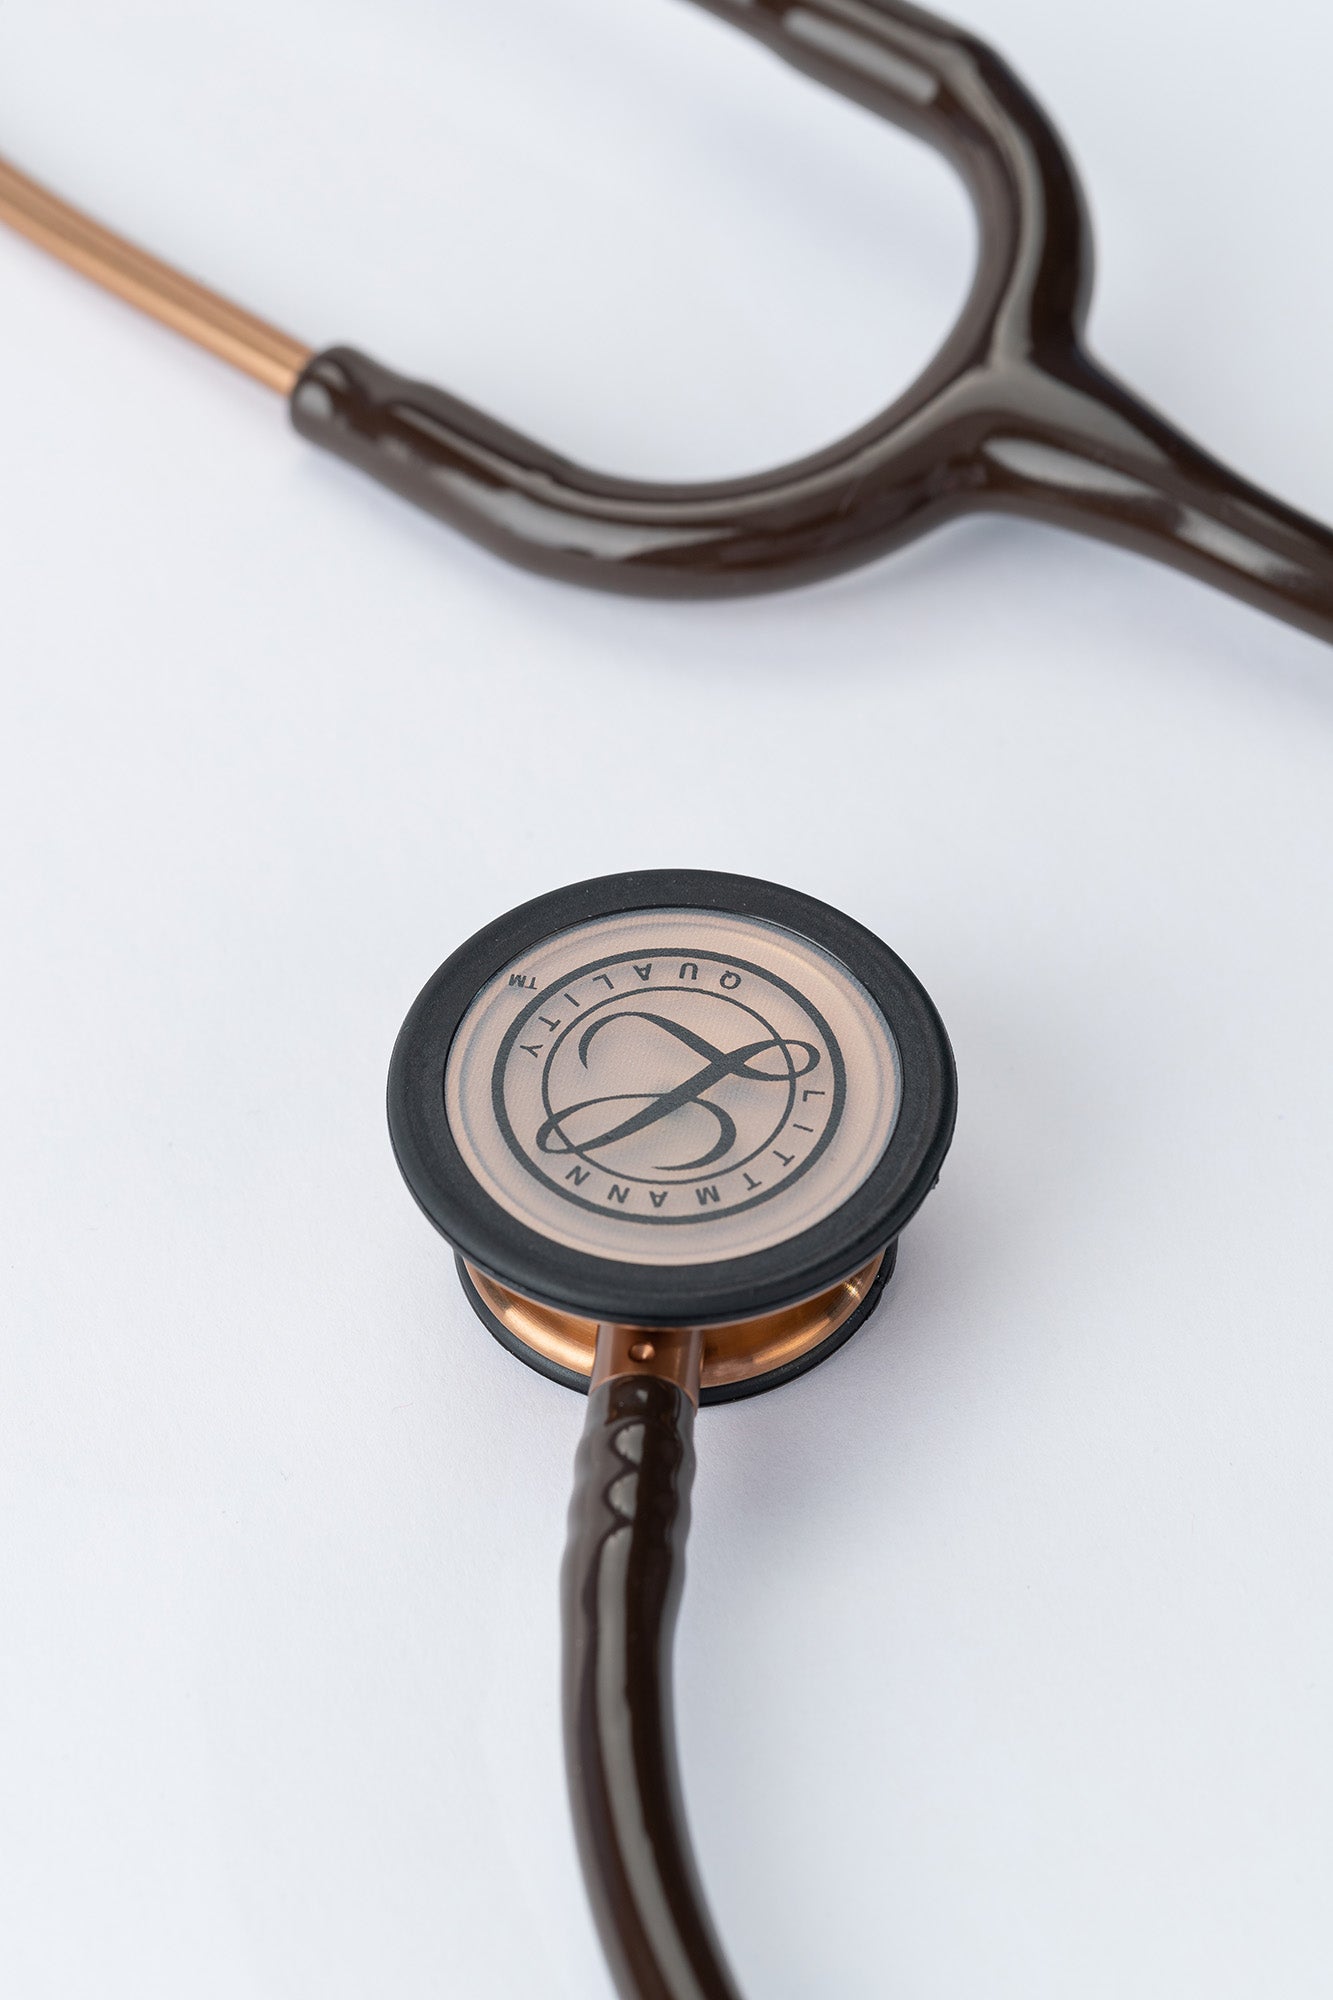 3M™ Littmann® Classic III™ Stethoscope, Copper-Finish Chestpiece, Chocolate Tube, 27 inch, 5809